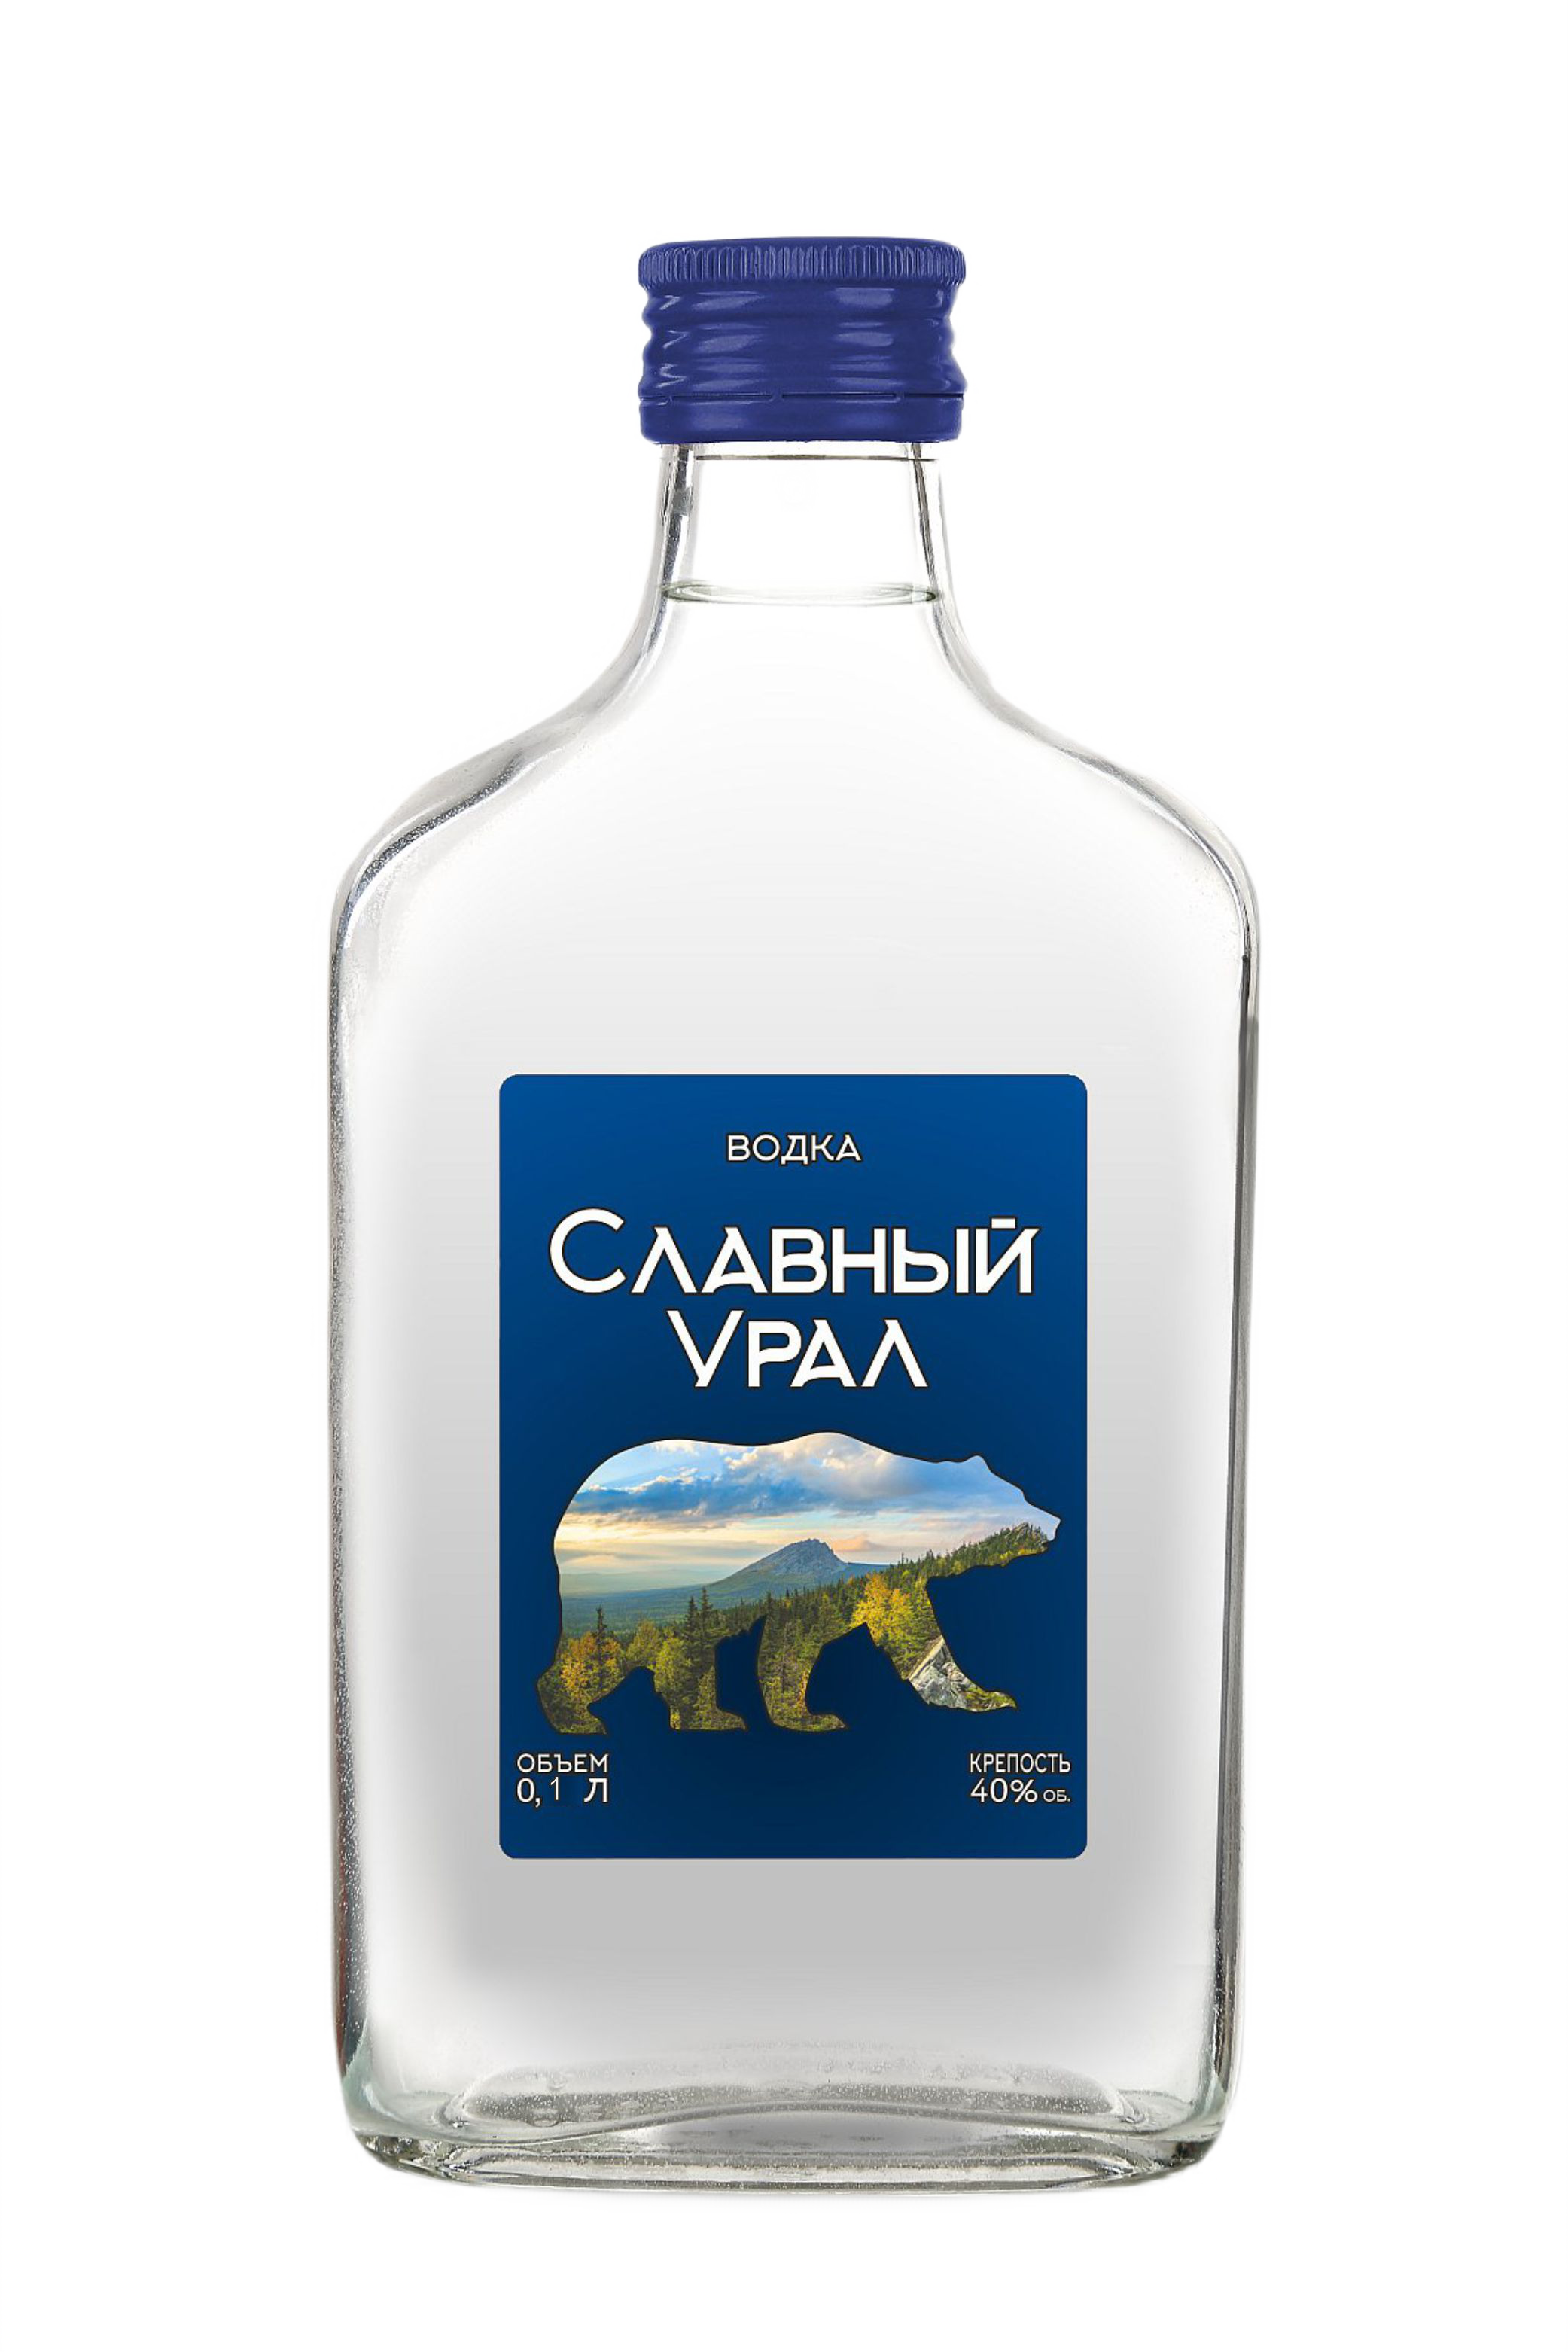 光荣乌拉尔伏特加 (Slavniy Ural) - 0.1 L : 光荣乌拉尔伏特加 (Slavniy Ural)